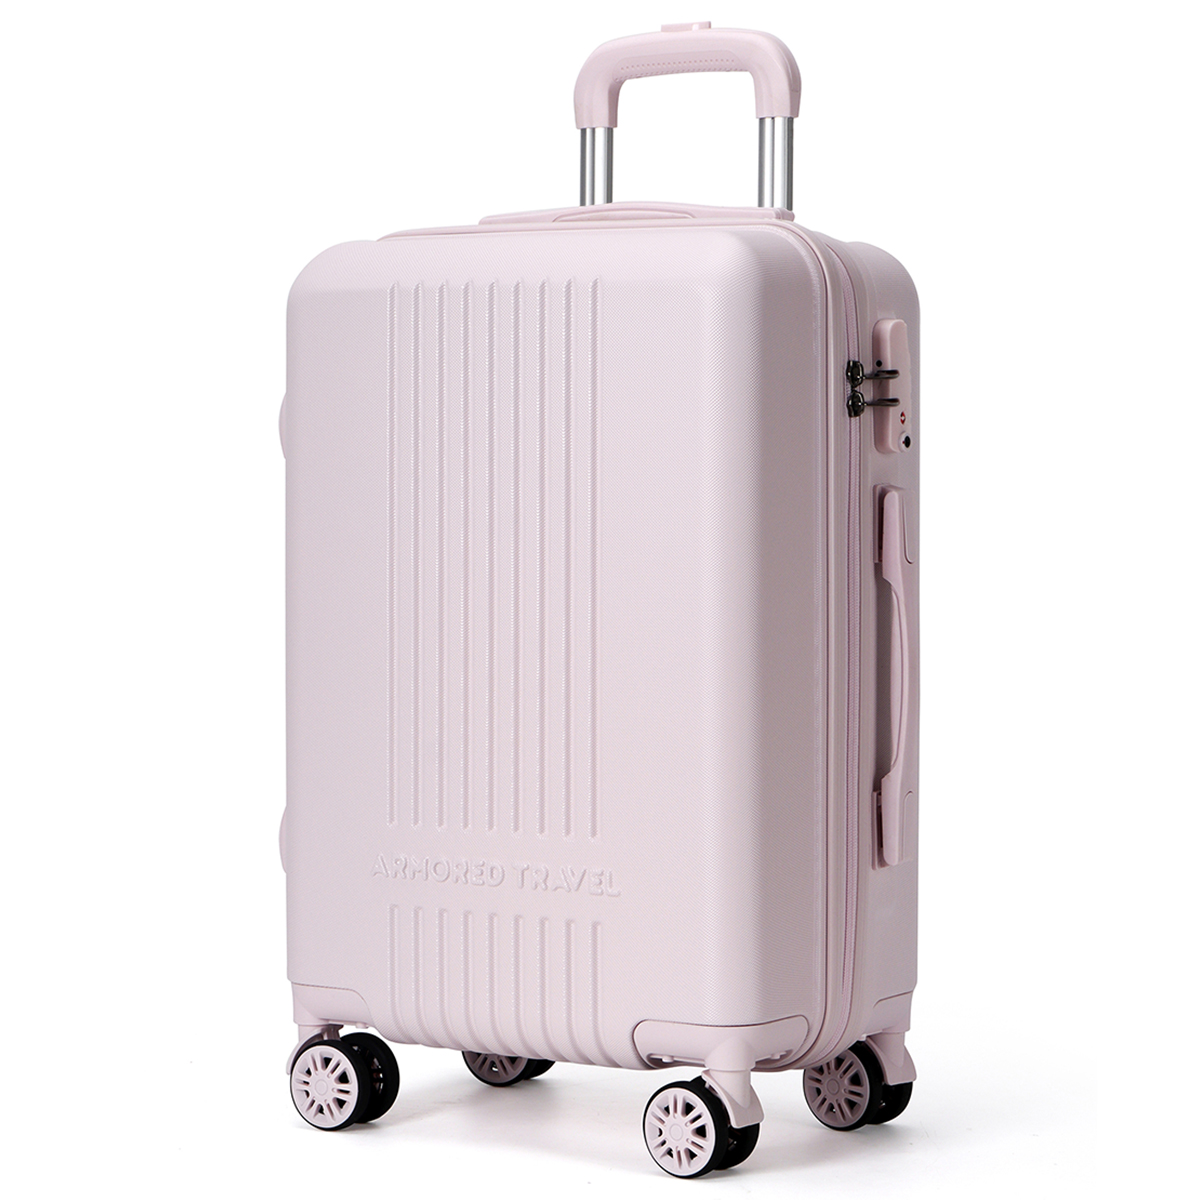 maleta-de-viaje-carry-on-de-mano-cabina-20-pulgadas-10-kg-abs-doble-calibre-candado-de-alta-seguridad-tsa-lock-rosa-armored-travel